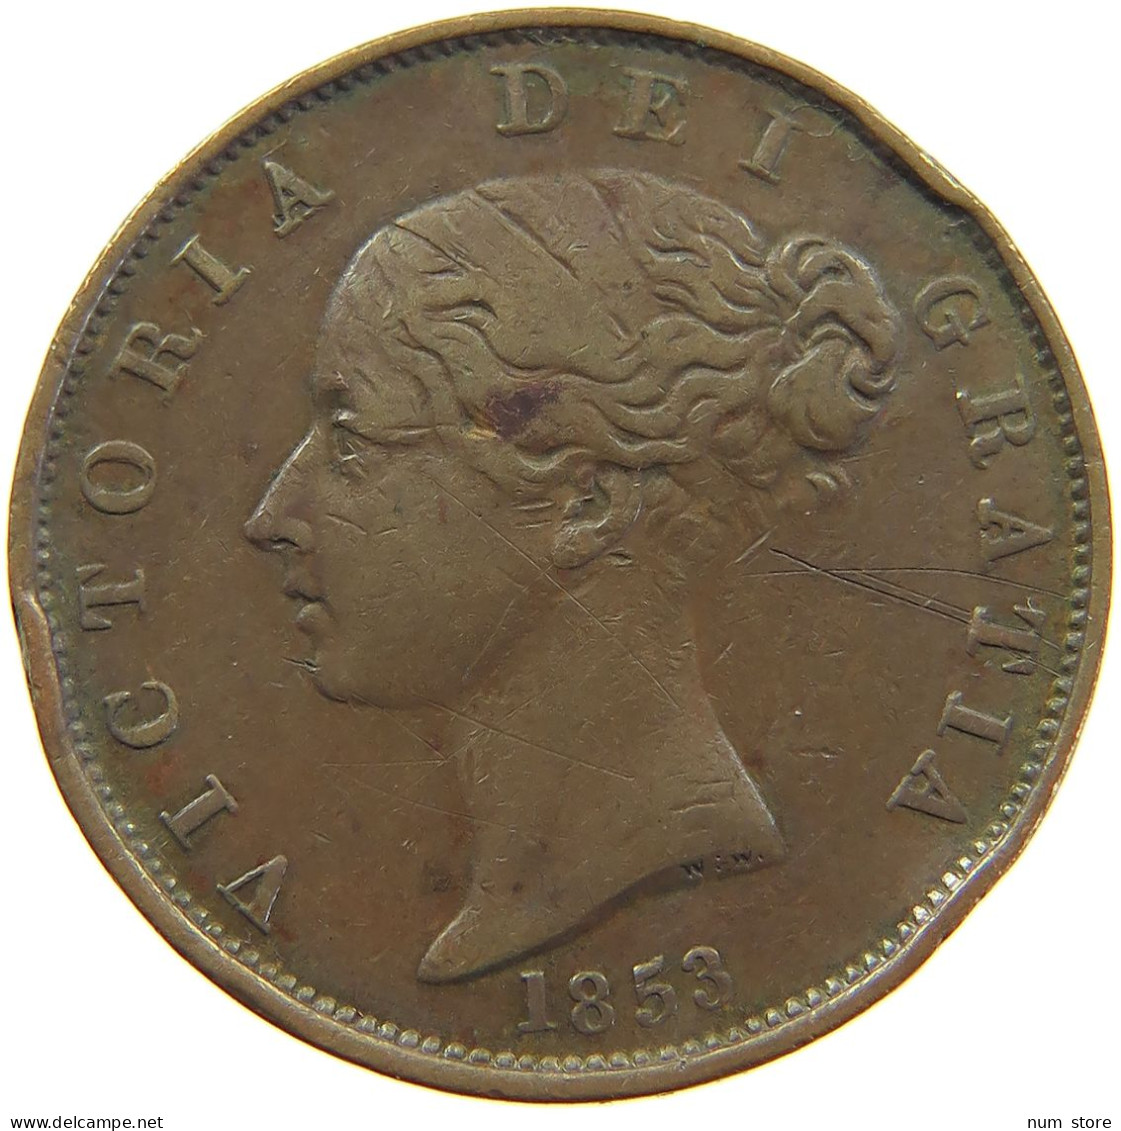 GREAT BRITAIN HALFPENNY 1853 Victoria 1837-1901 #s009 0241 - C. 1/2 Penny